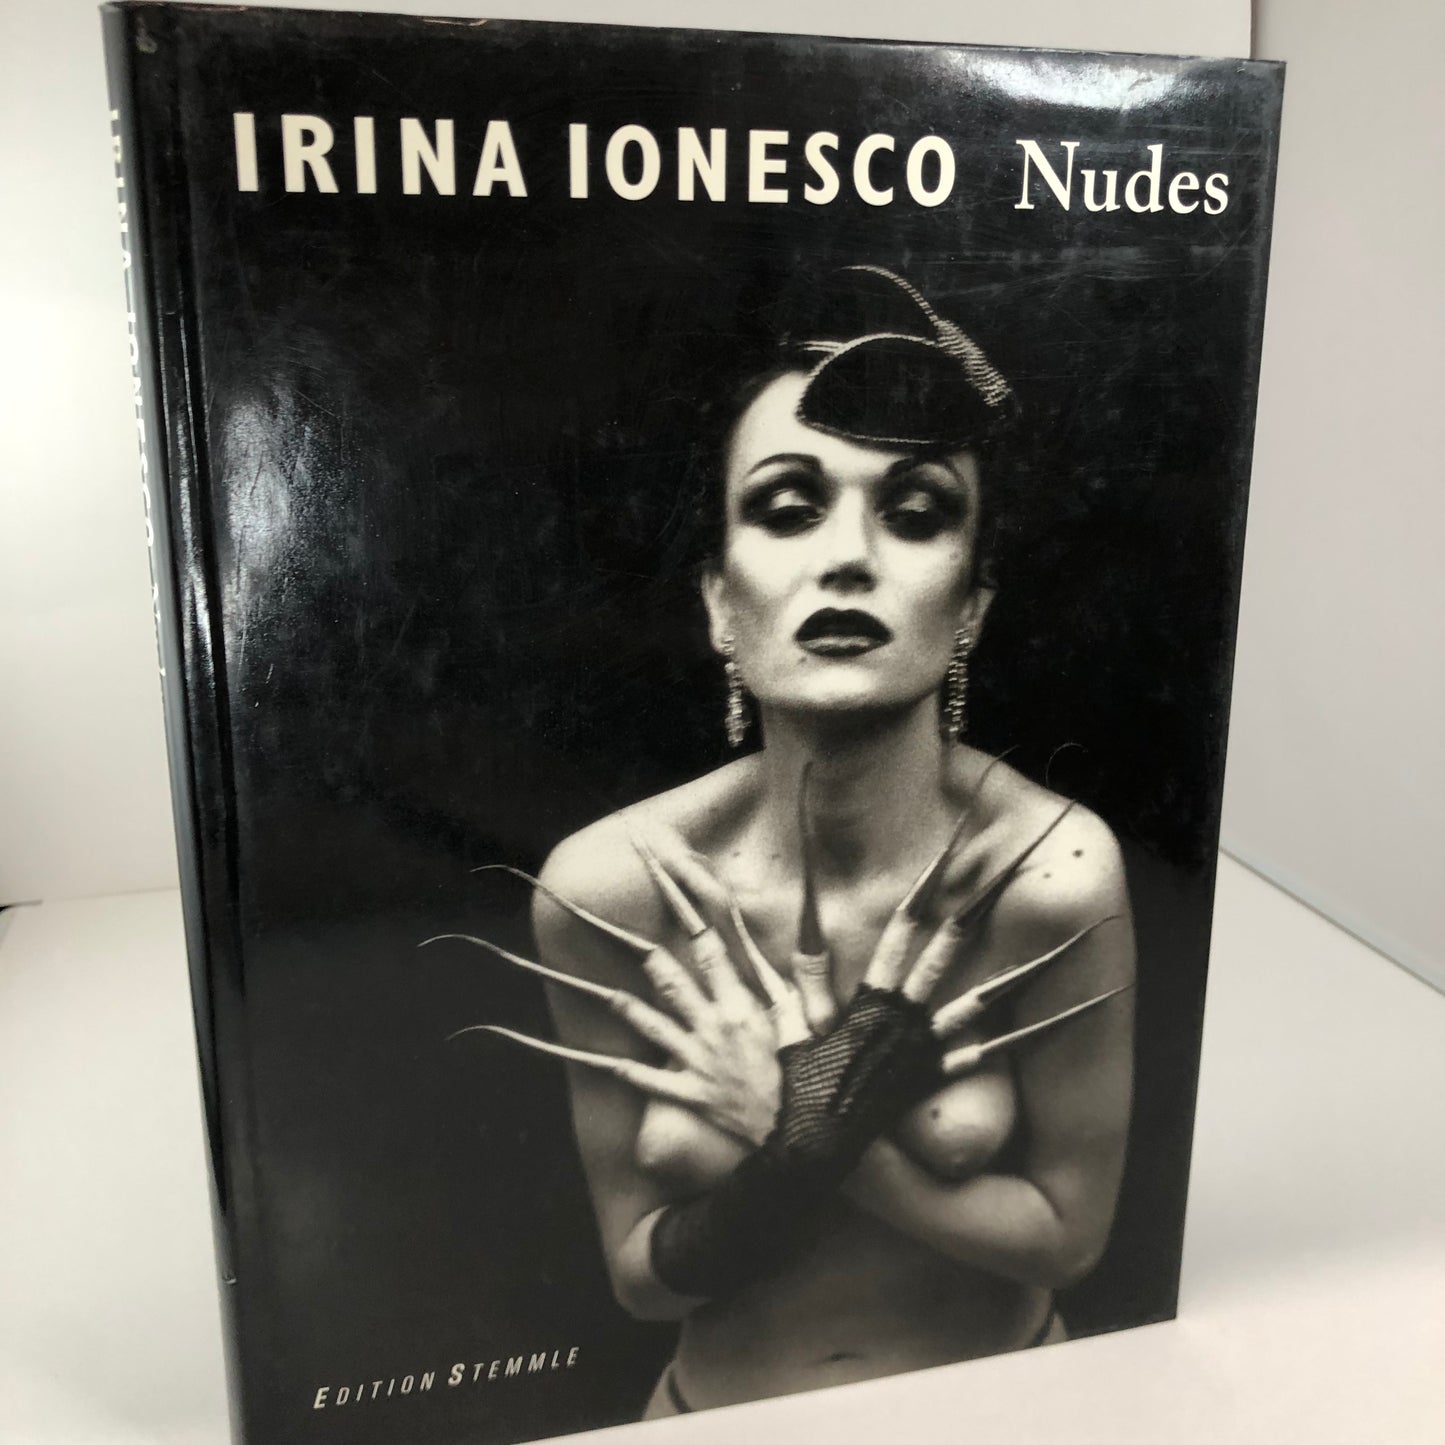 Irina Ionesco Nudes